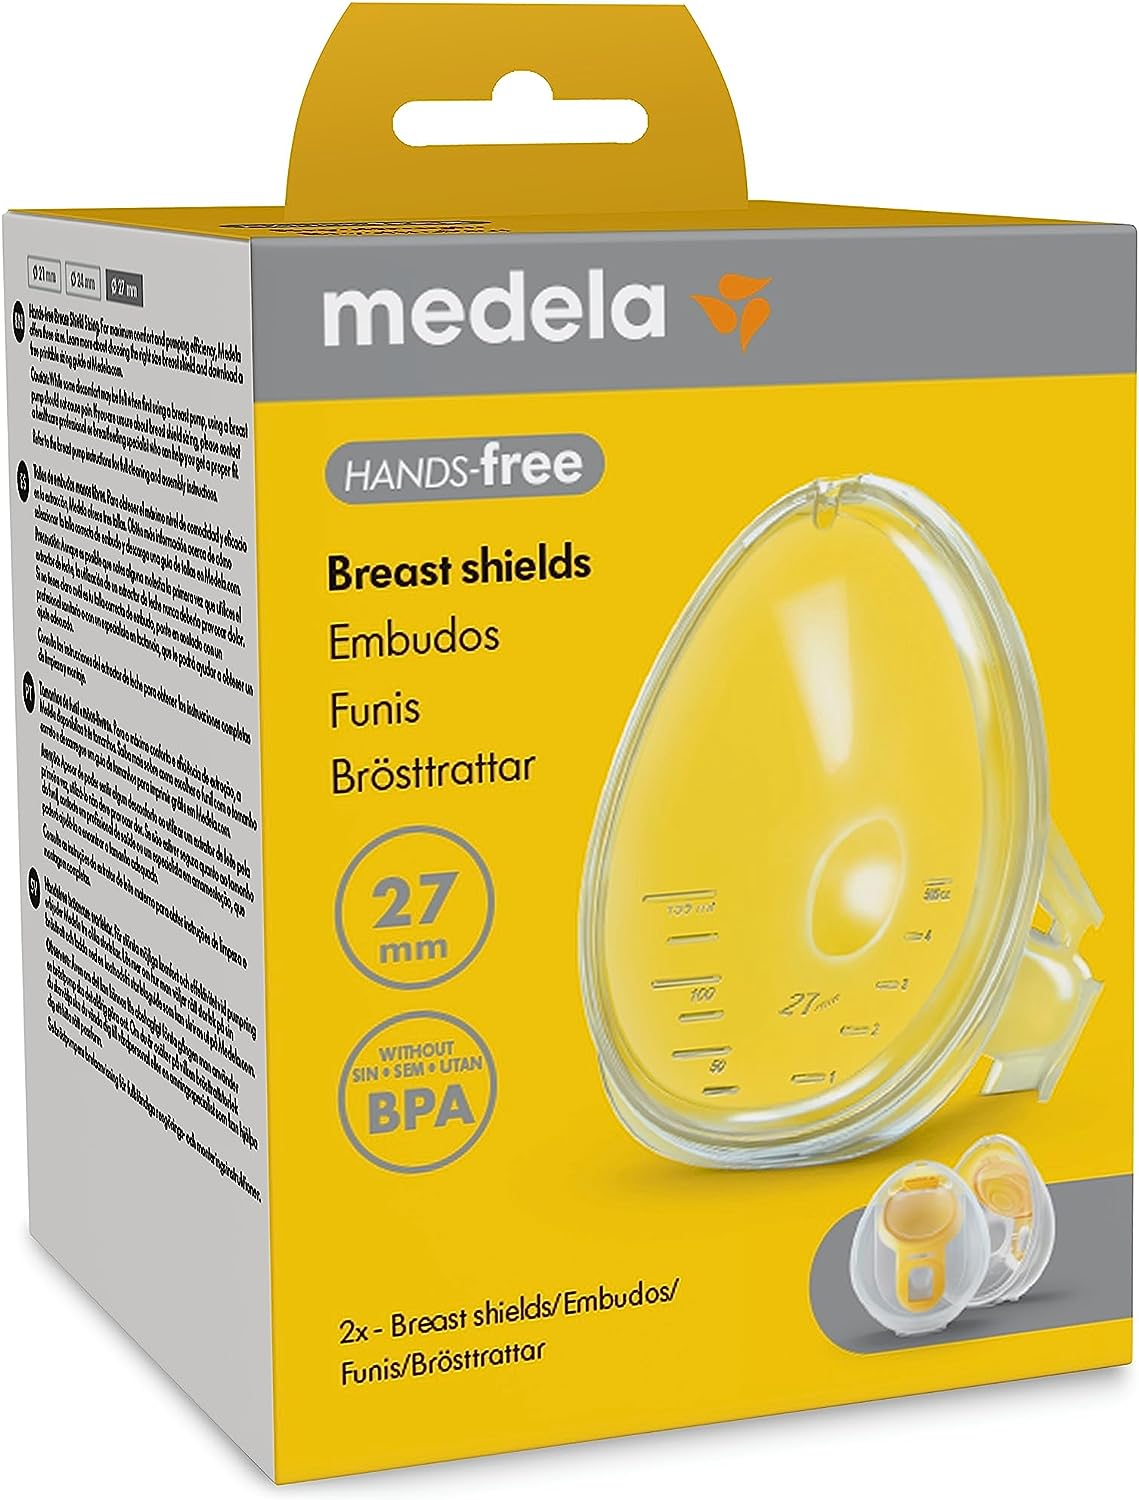 Medela Contact Nipple Shields M X2